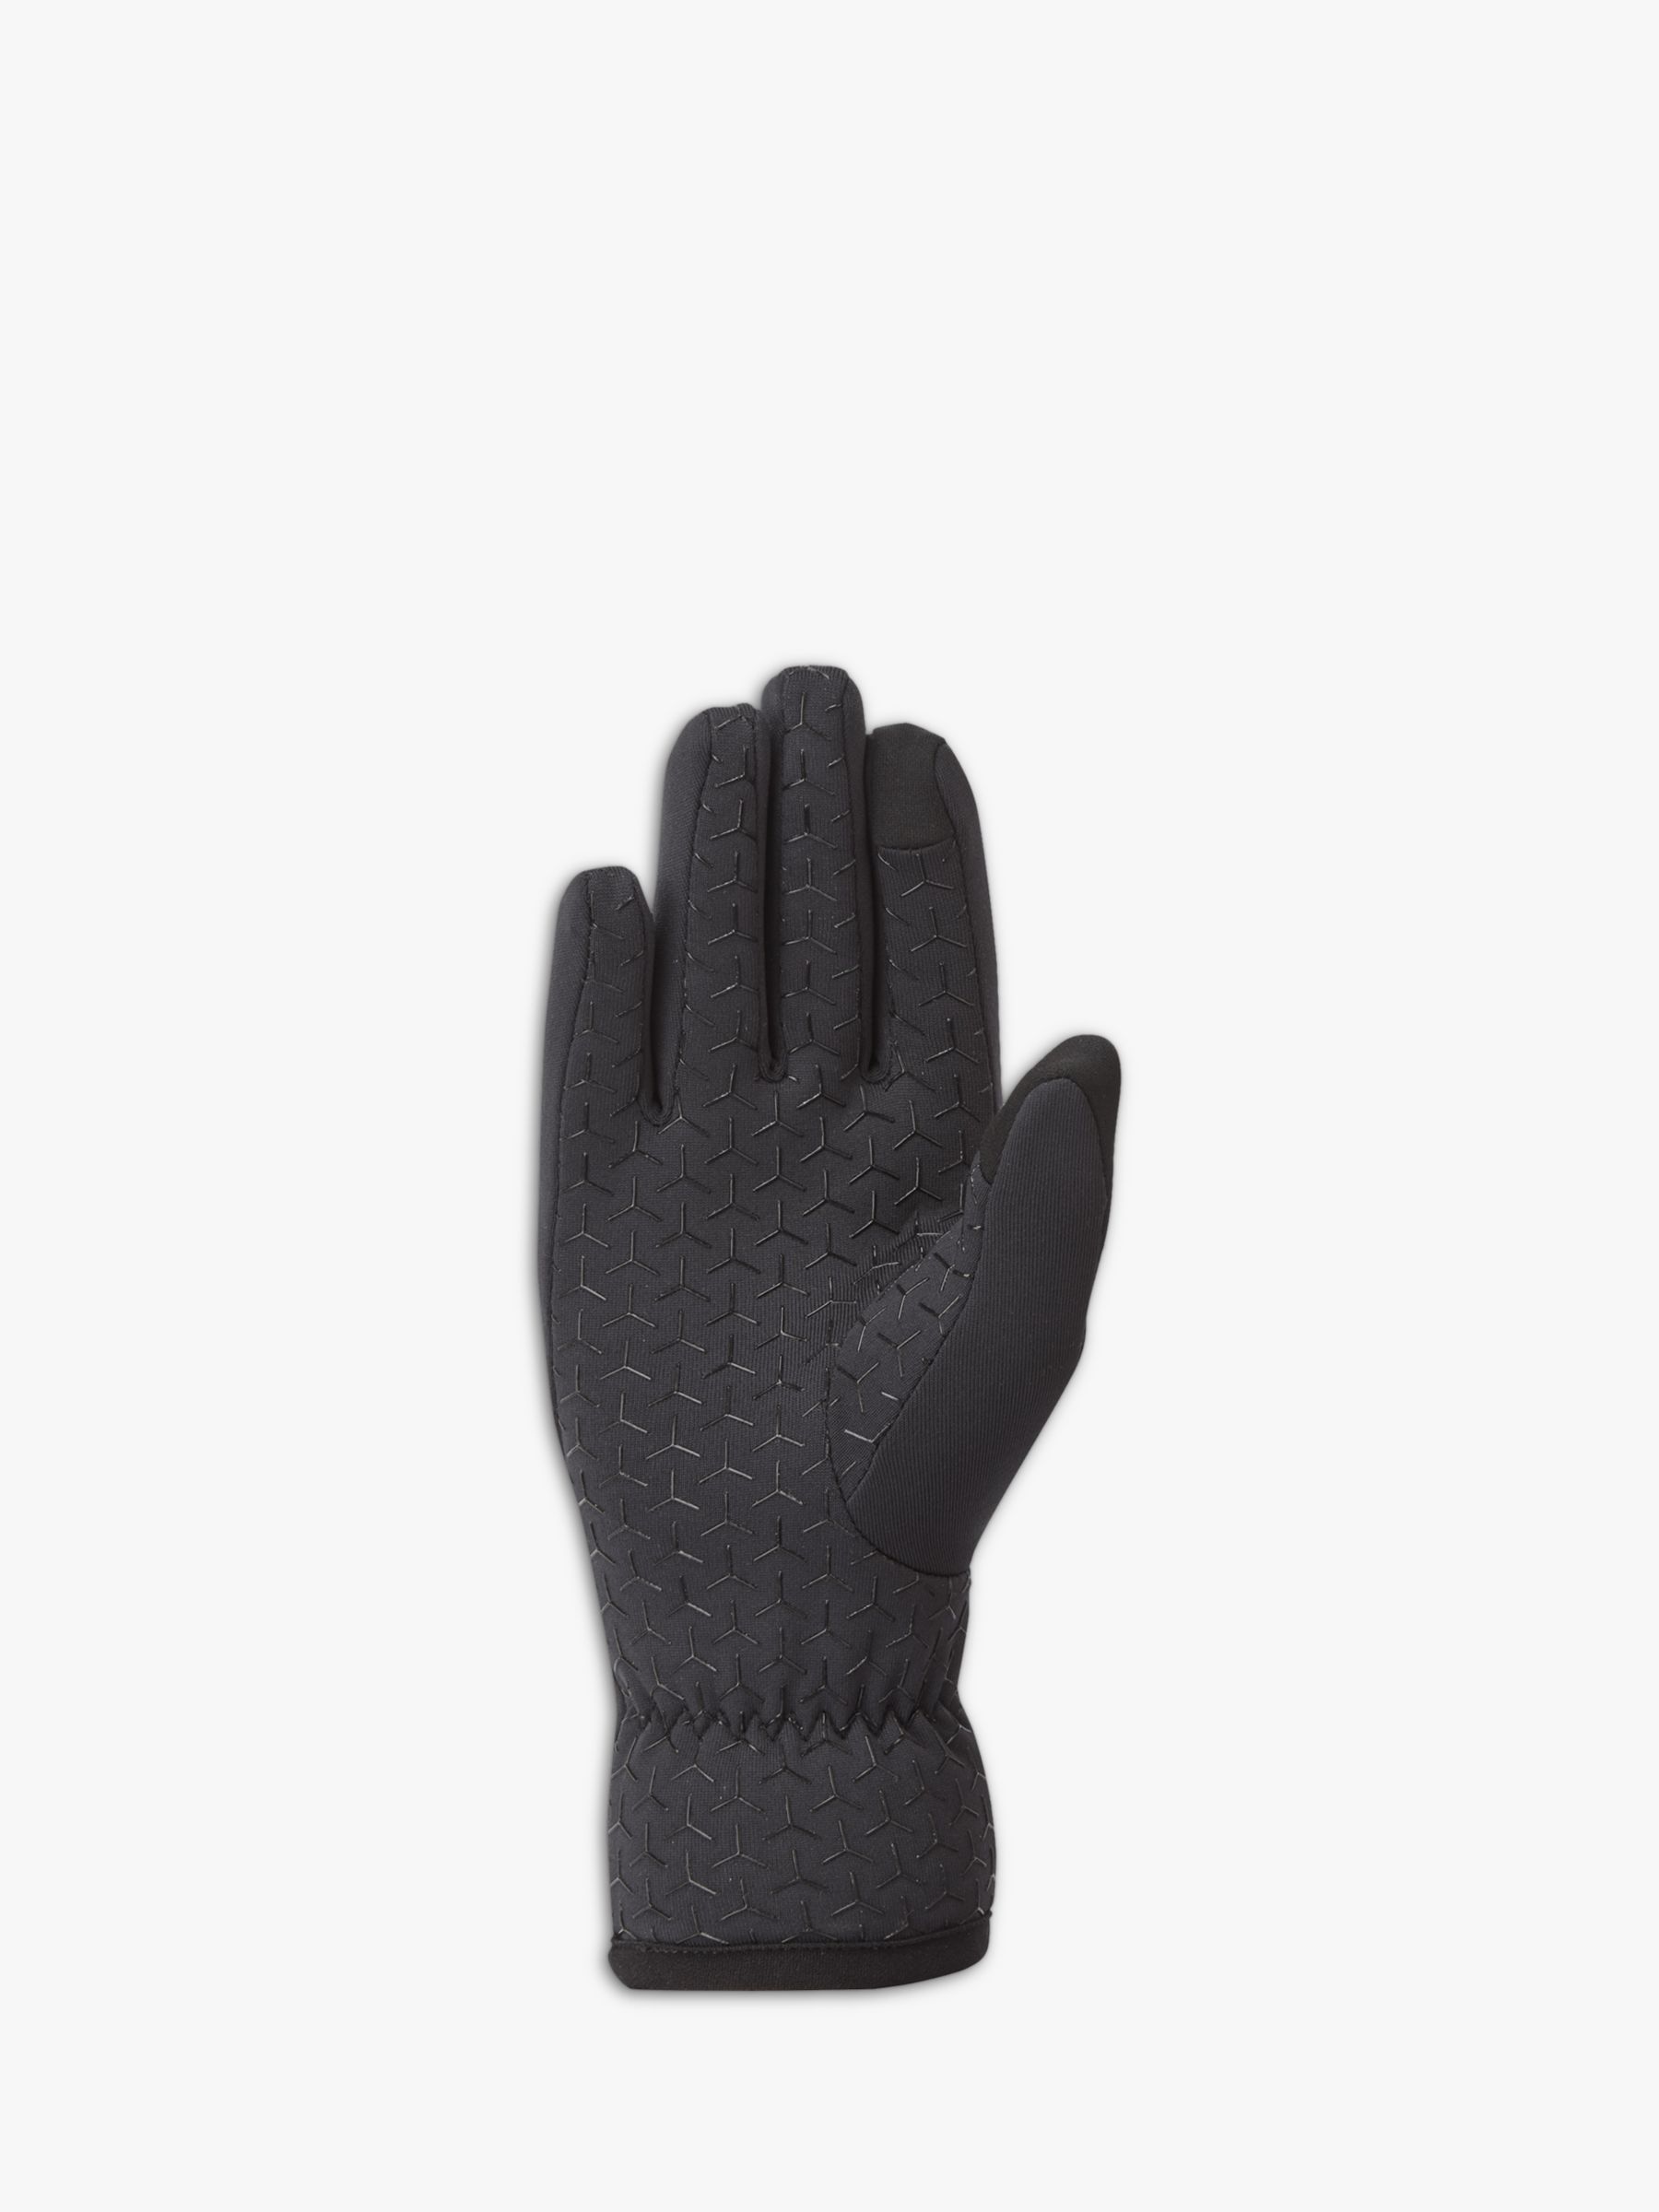 Buy Montane Women's Fury XT Stretch Gloves, Black Online at johnlewis.com